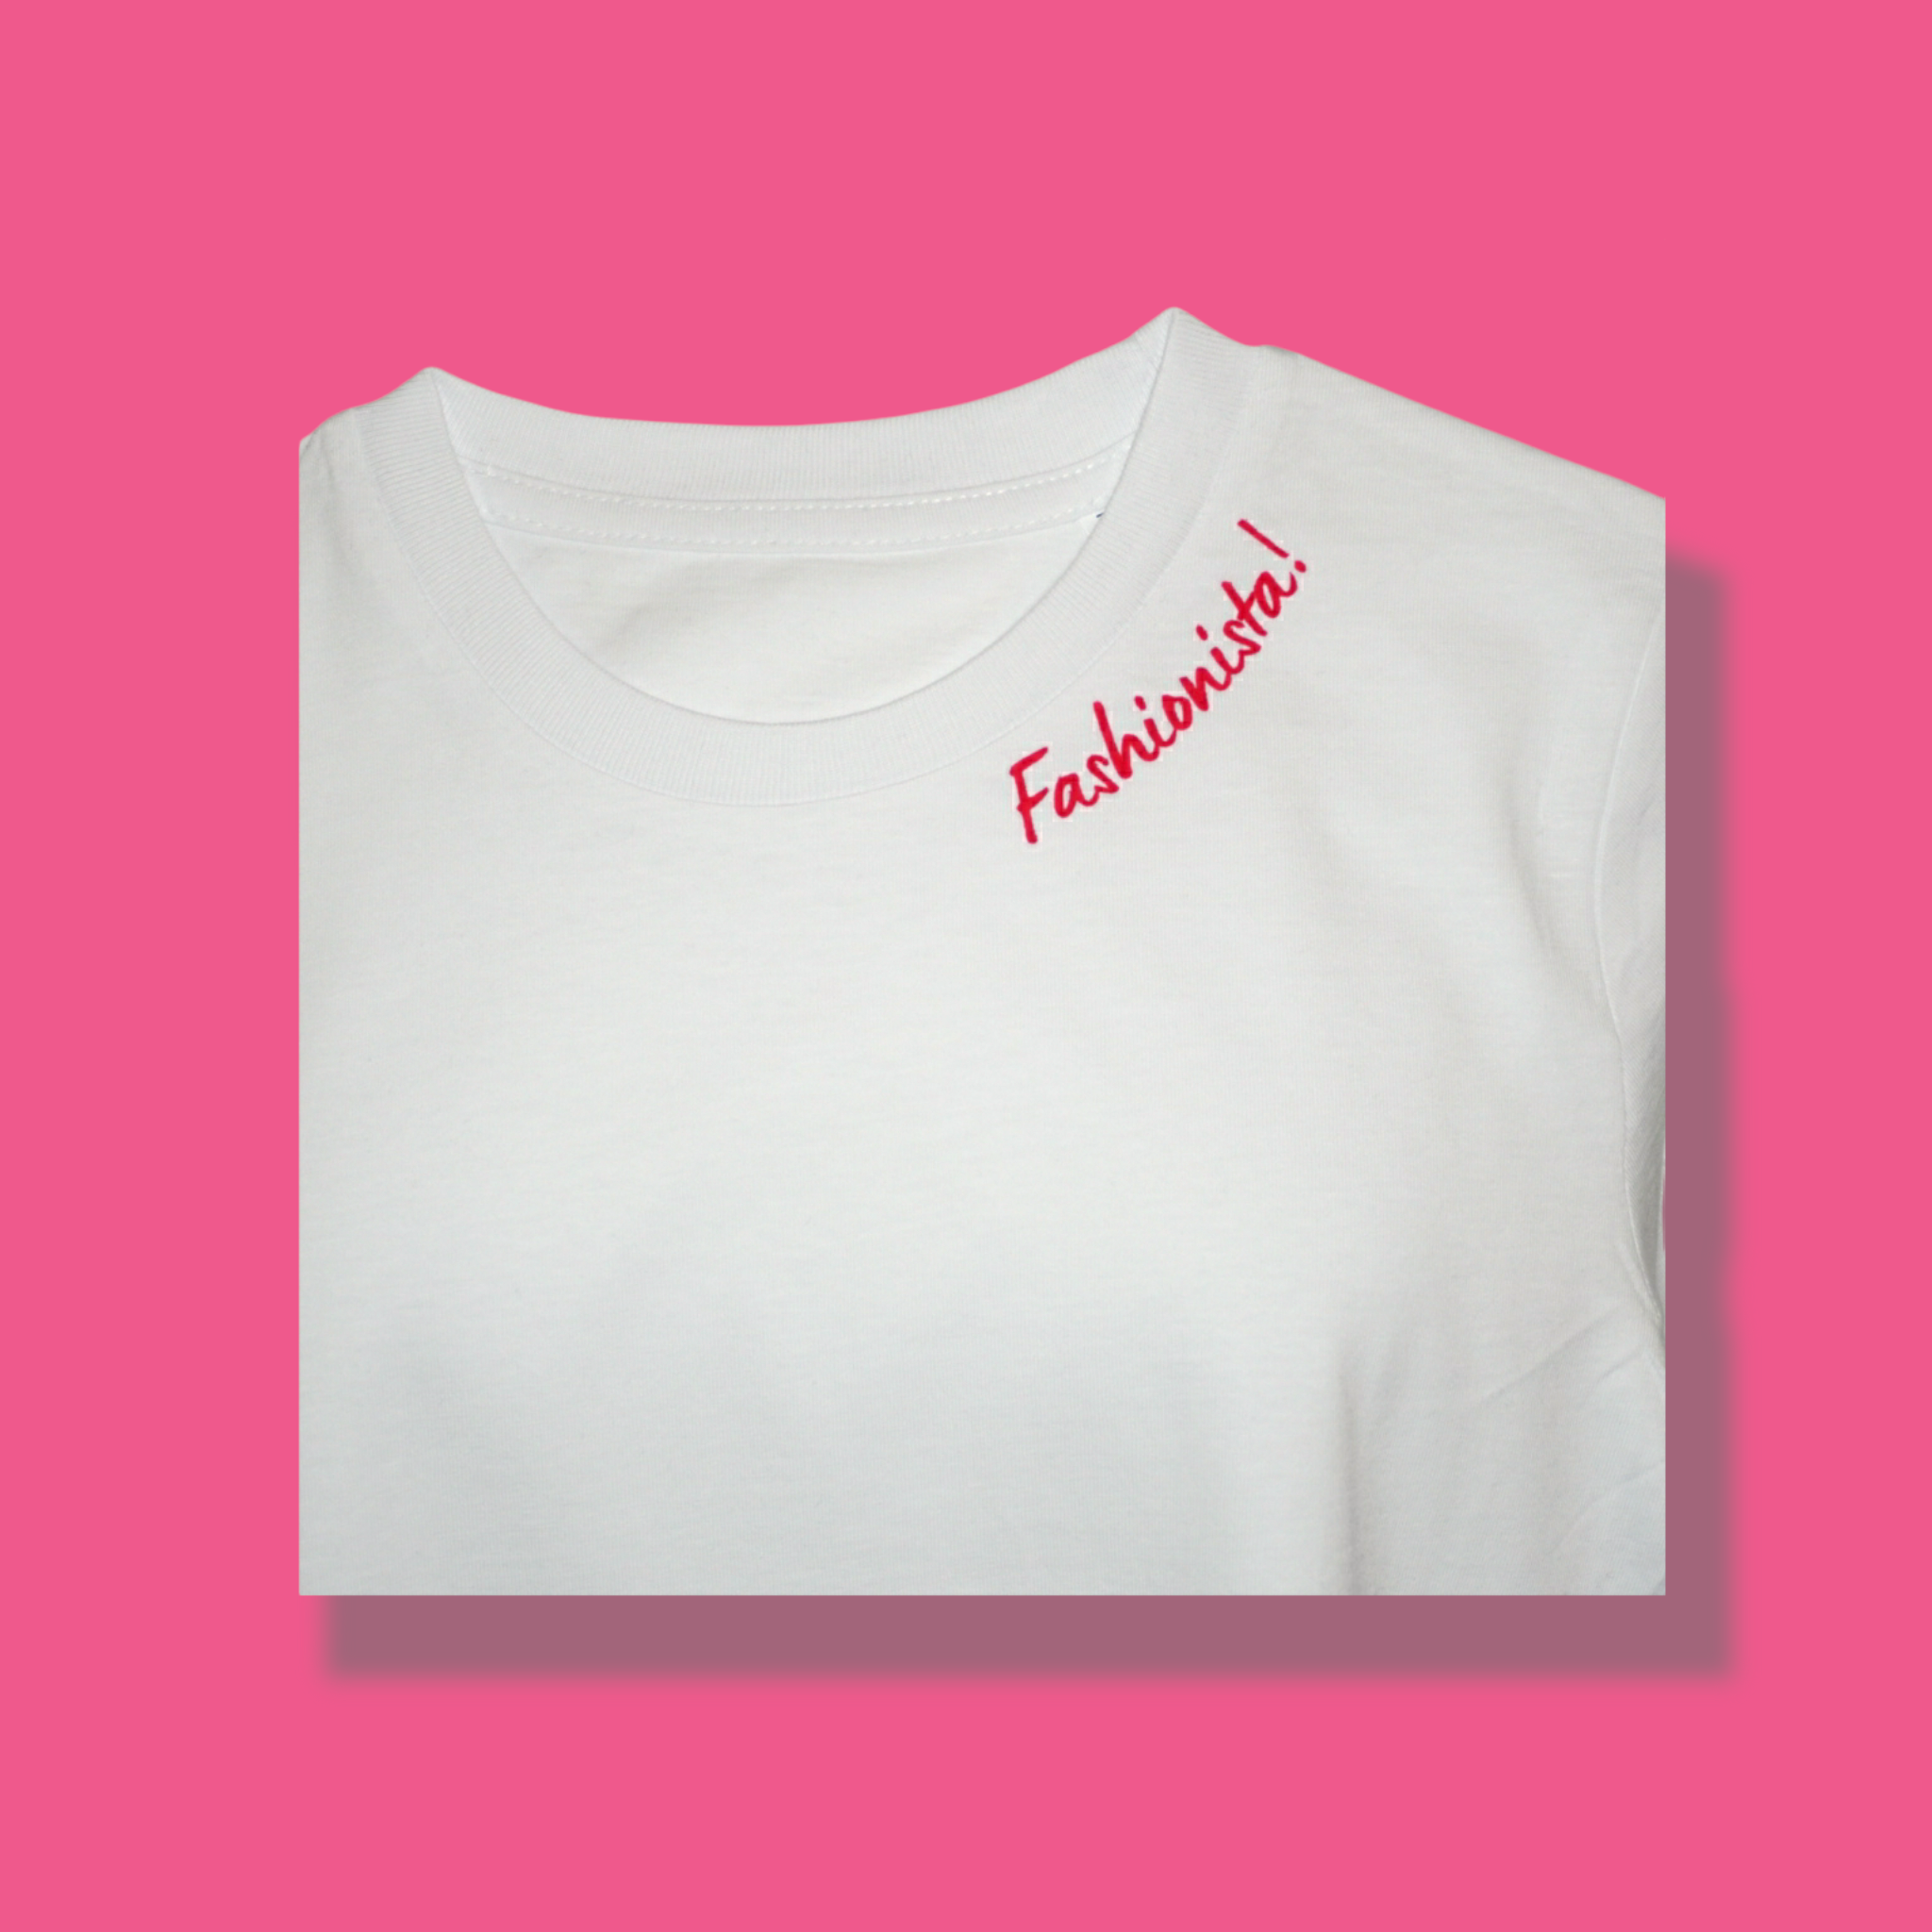 Phoenix for Kids | Fashionista T-Shirt